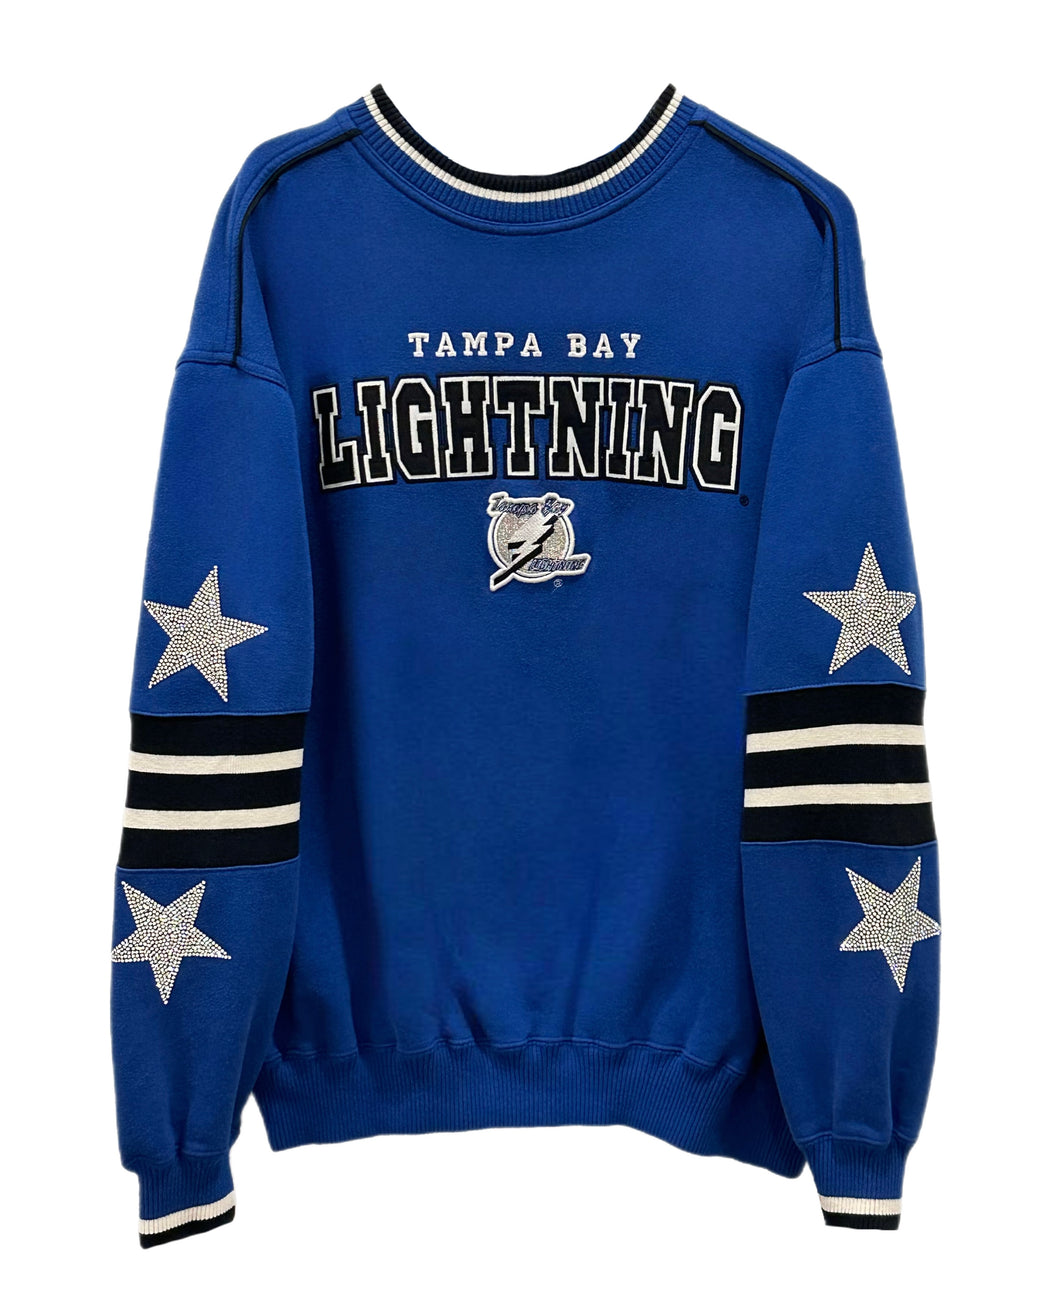 Tampa Bay Lightning, NHL One of a KIND Vintage Sweatshirt with Crystal Star Design, Custom Crystal Name & Number